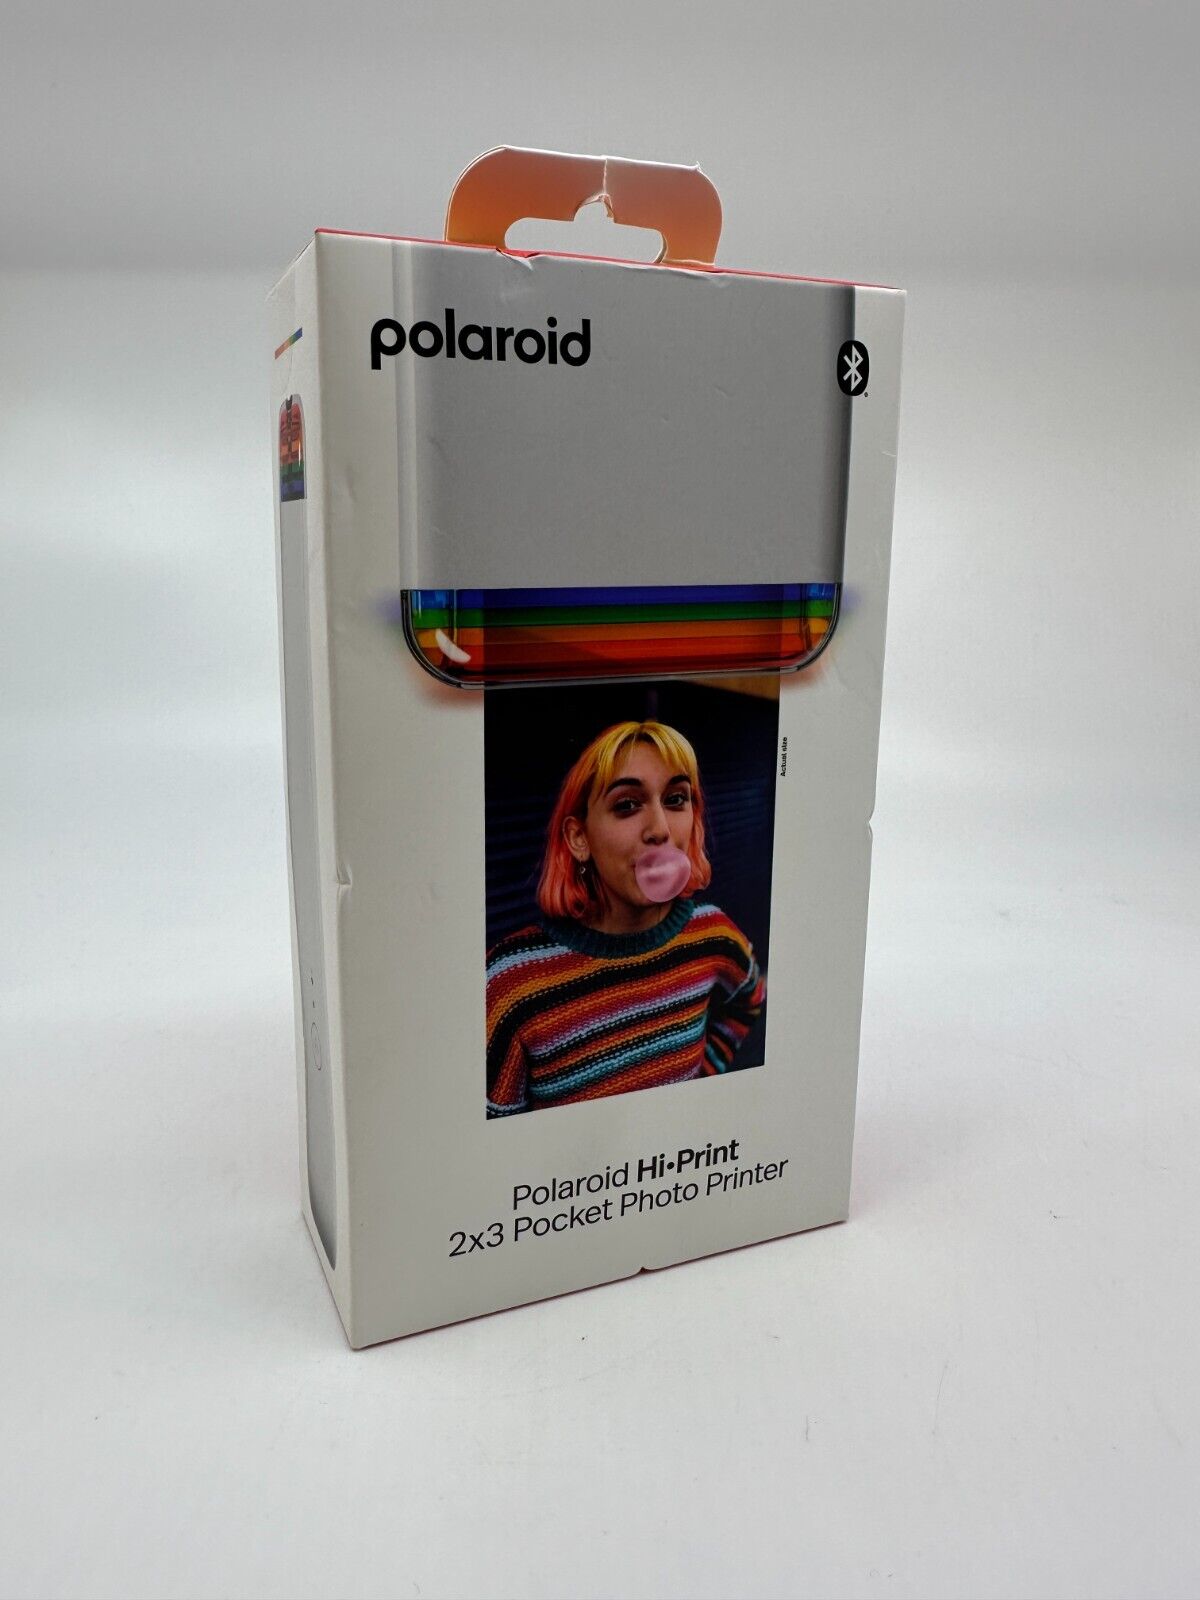 New & Sealed - Polaroid Hi-Print Bluetooth 2x3 Pocket Photo Printer - FreeShip